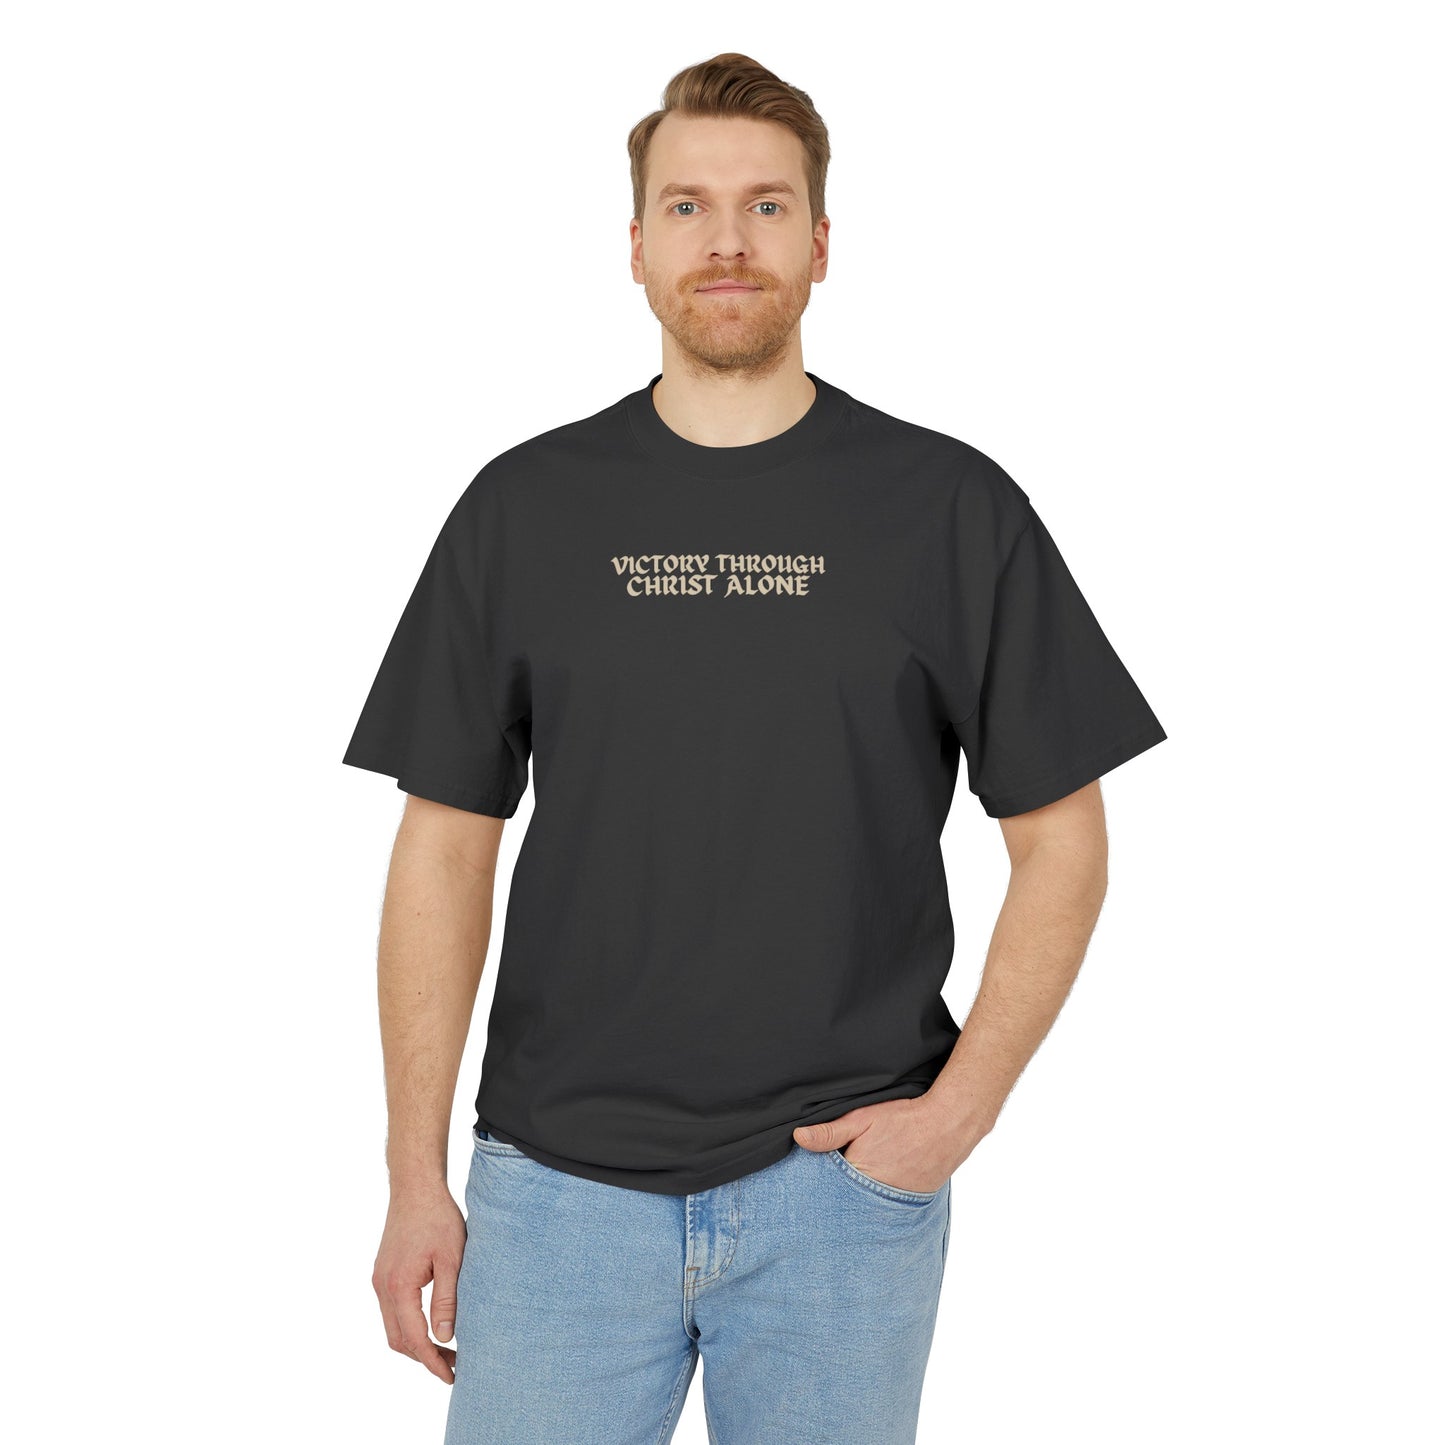 UNBROKEN VALY T-Shirt - Faded Black